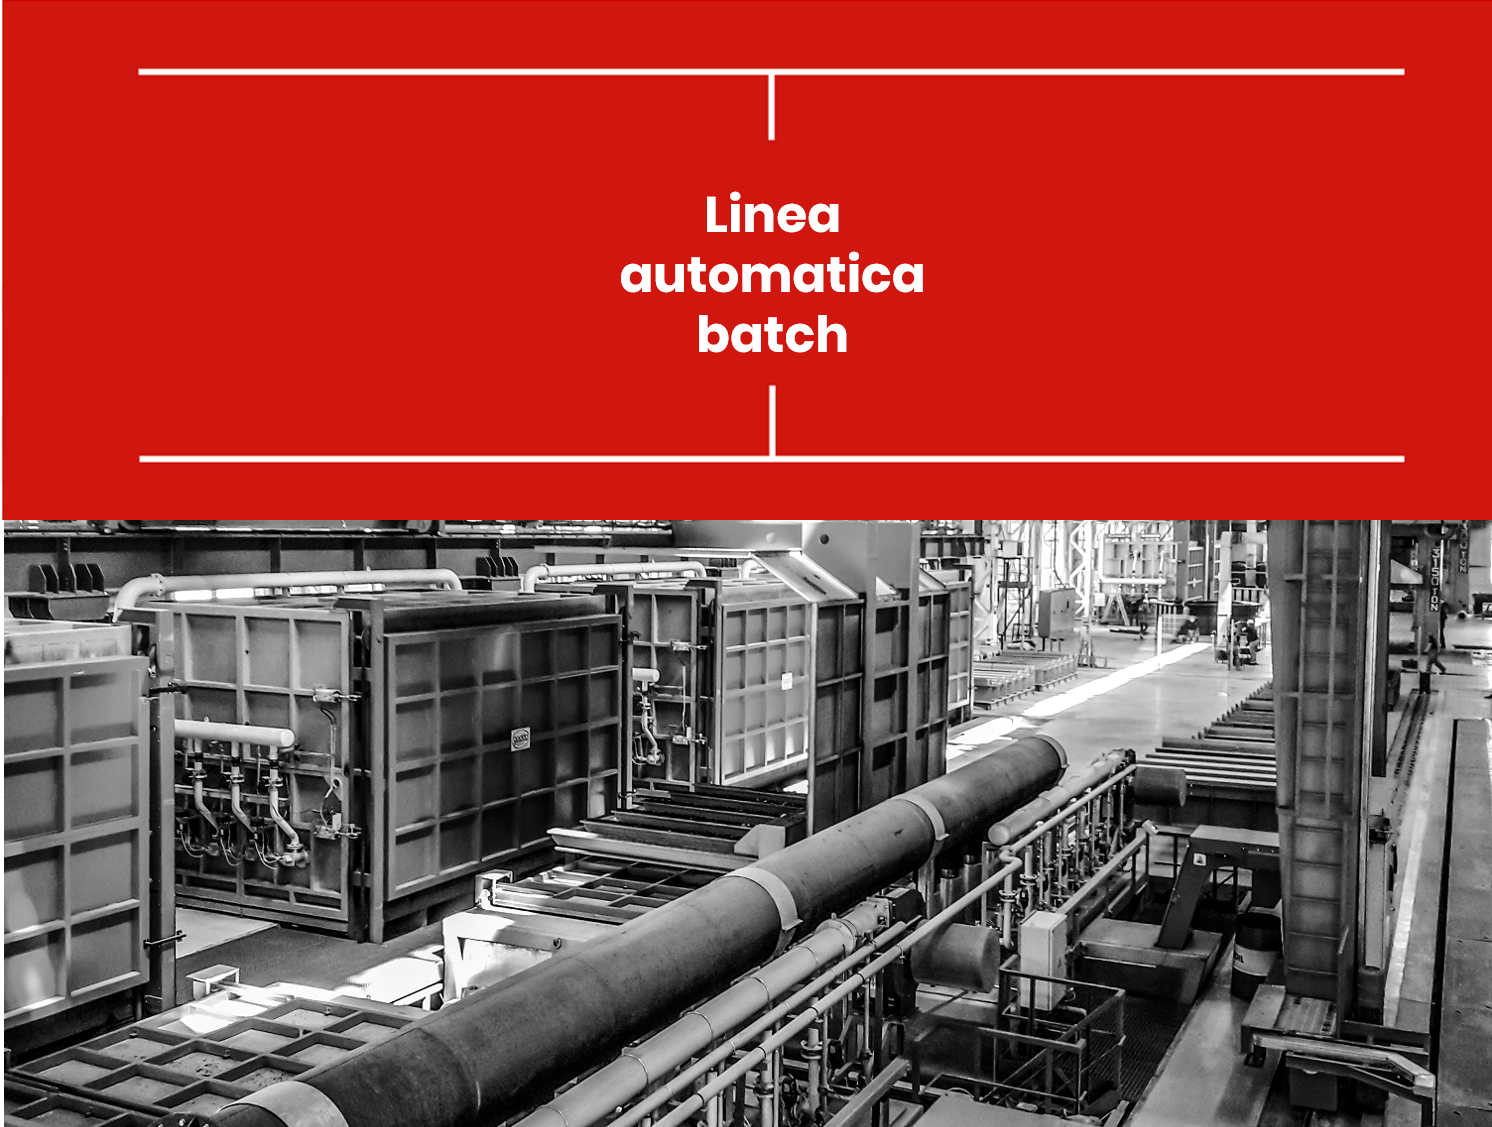 Linea automatica batch - forni industriali Gadda group